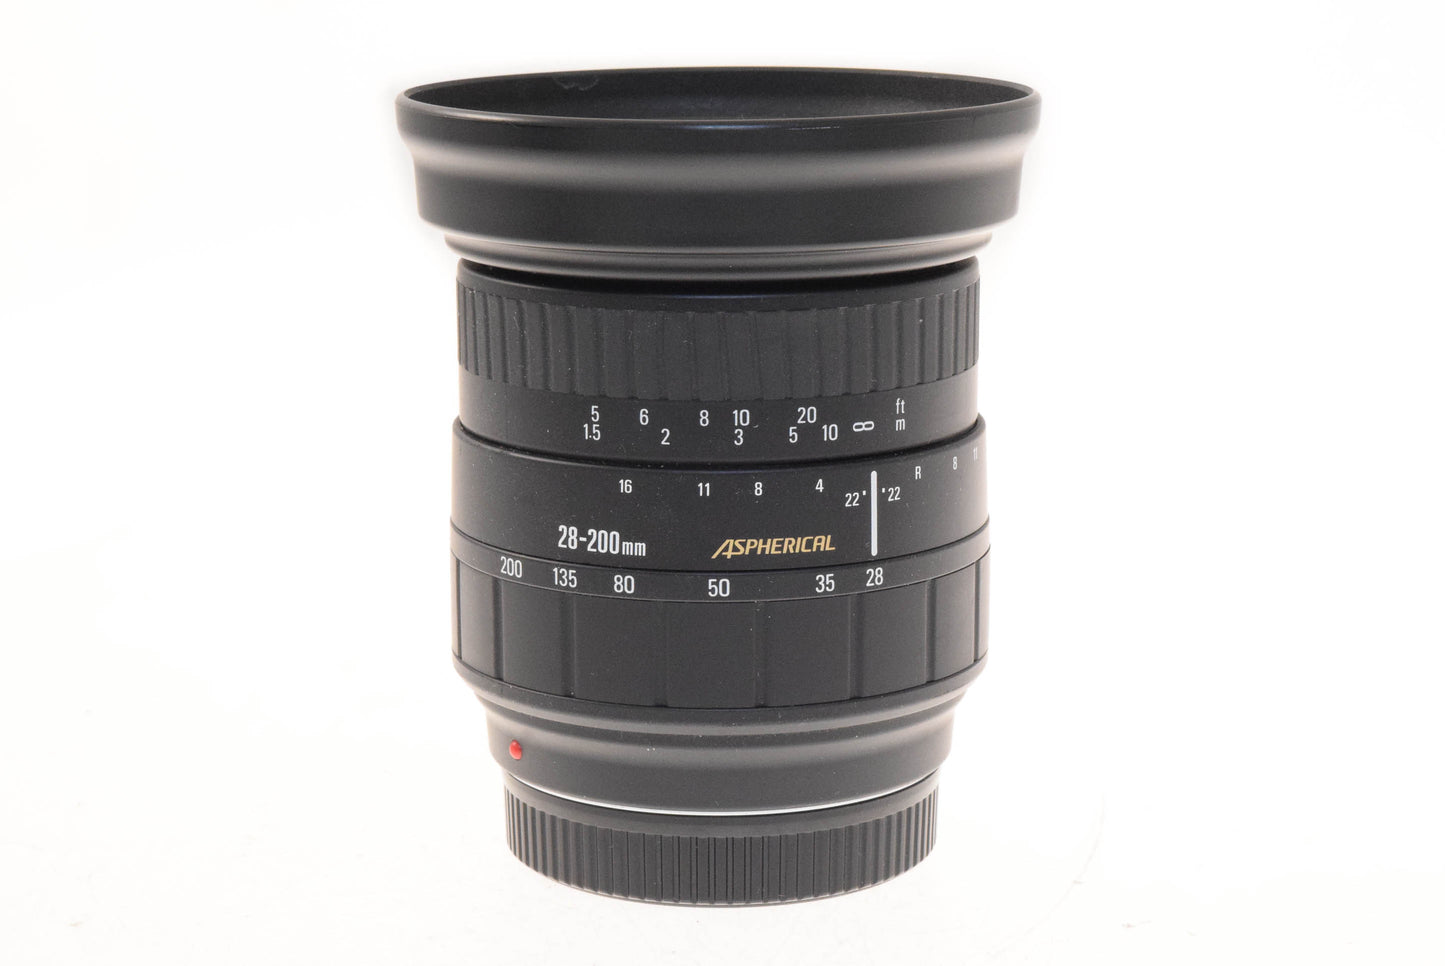 Sigma 28-200mm f3.8-5.6 UC - Lens